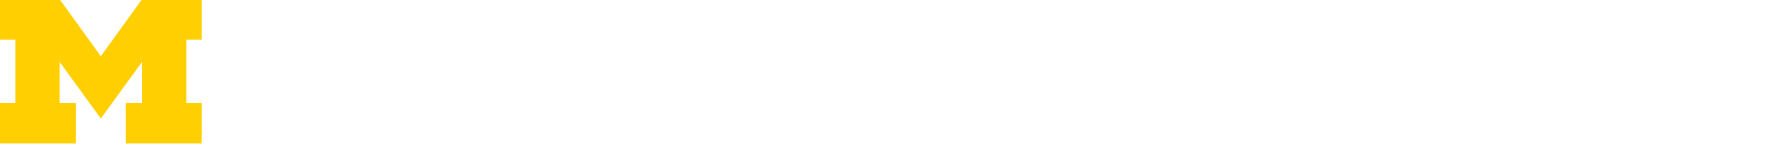 Computational Vascular Biomechanics Lab Logo